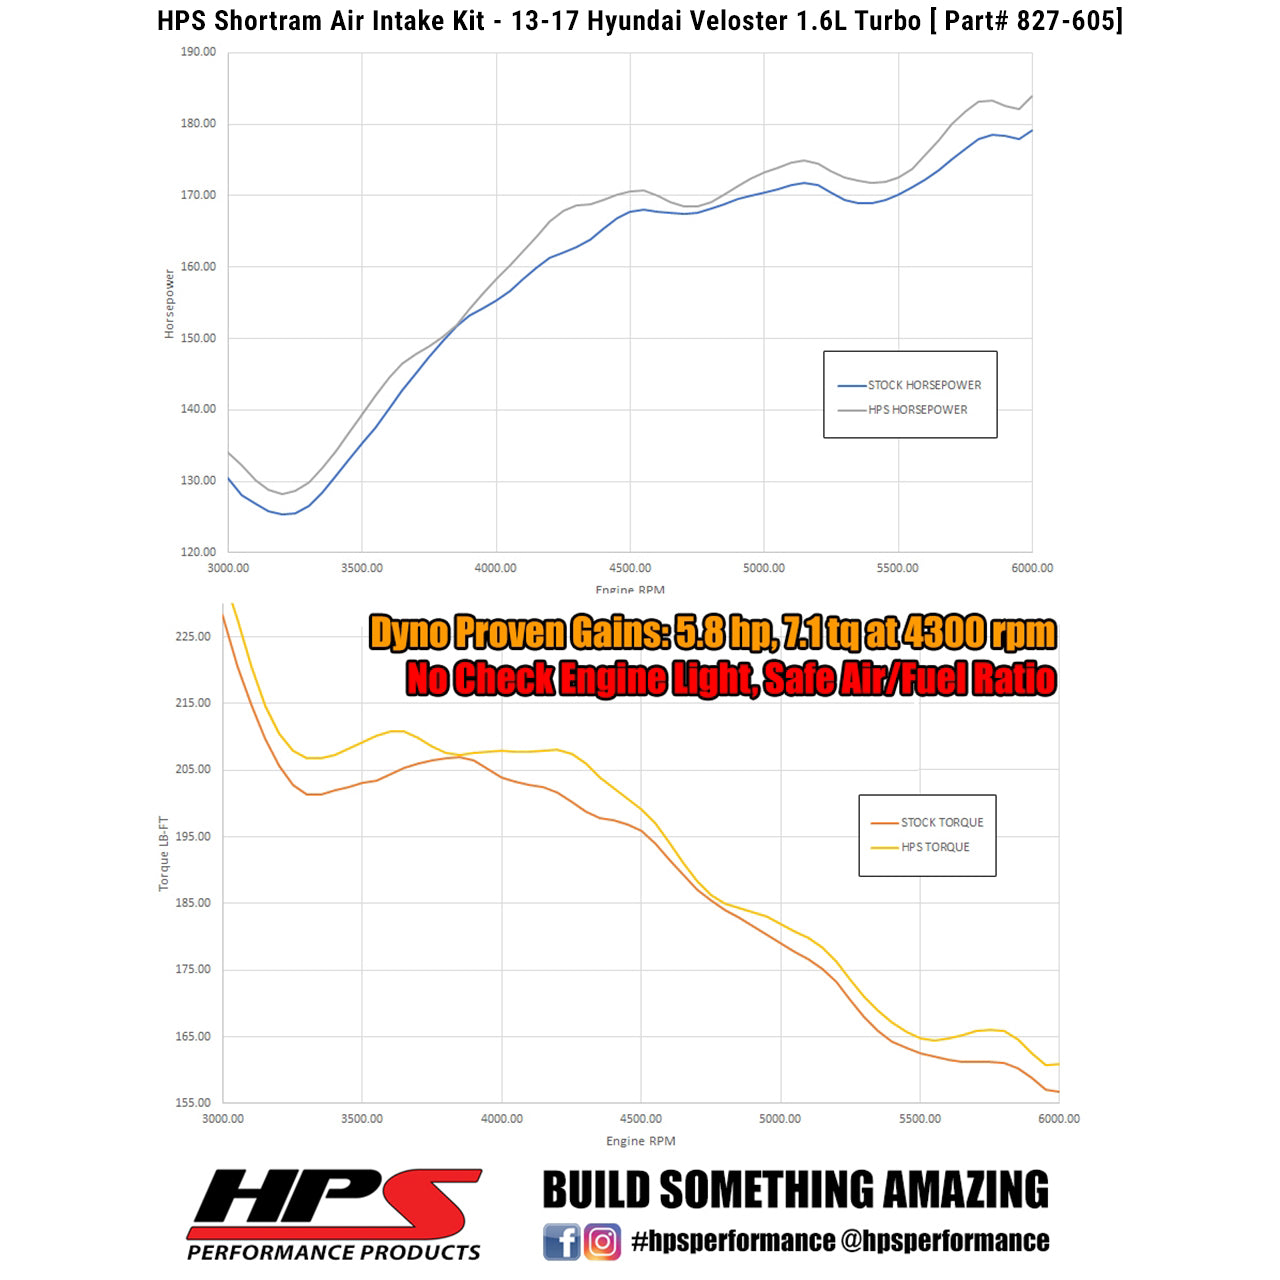 Dyno proven increase horsepower 5.8 whp torque 7.1 ft/lb HPS Shortram Cold Air Intake Kit 2013-2017 Hyundai Veloster 1.6L Turbo 827-605